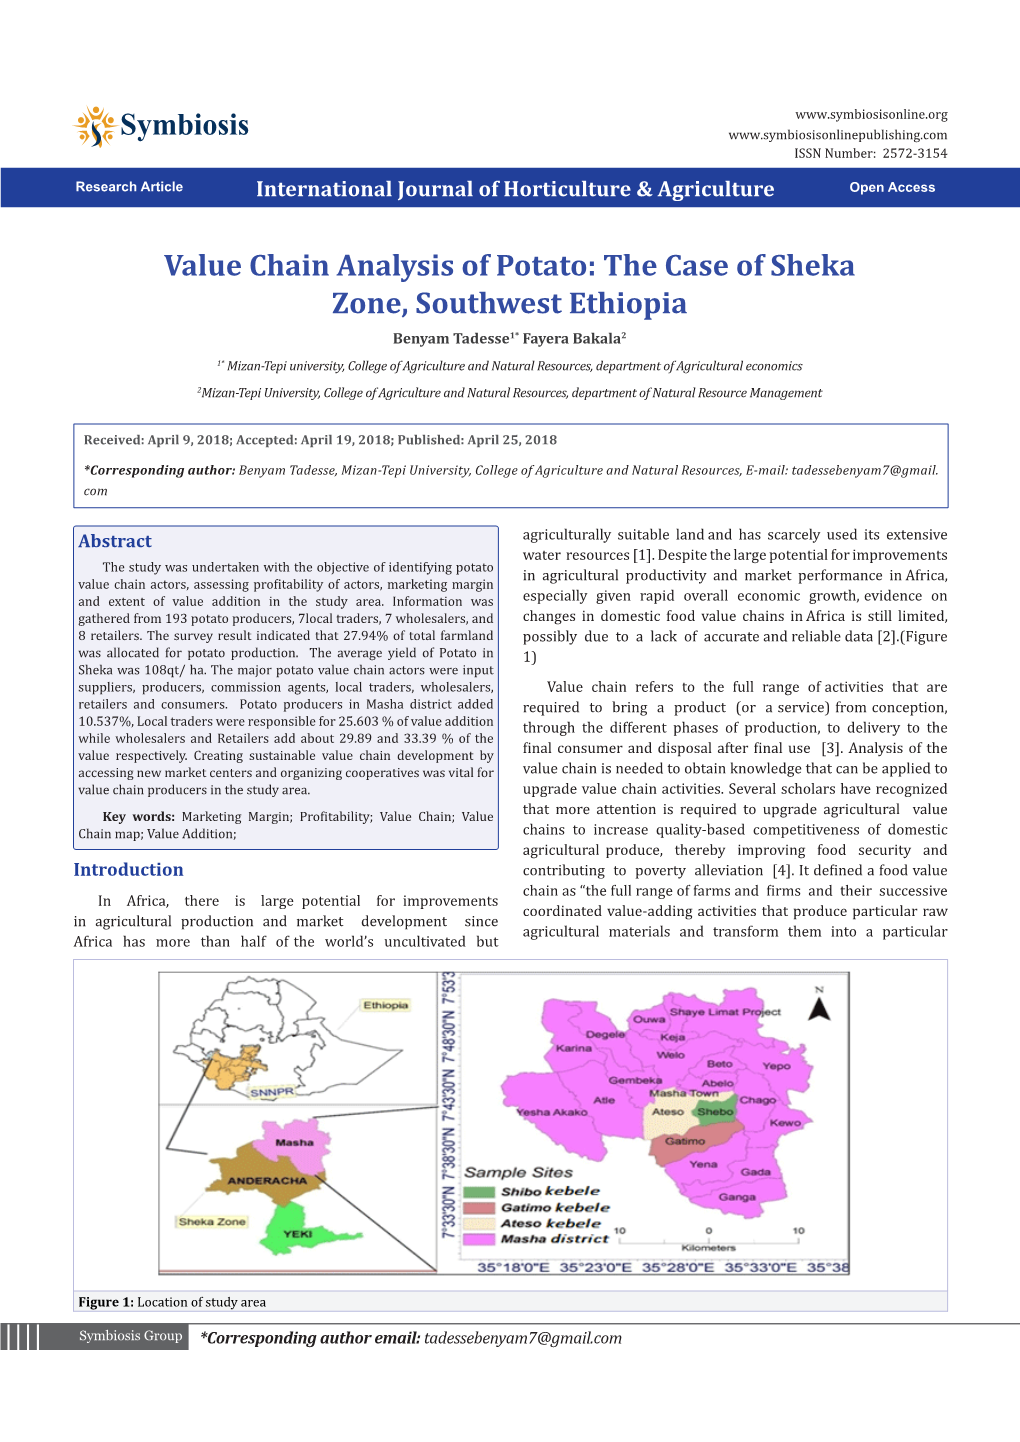 Value Chain Analysis of Potato: the Case of Sheka Zone, Southwest